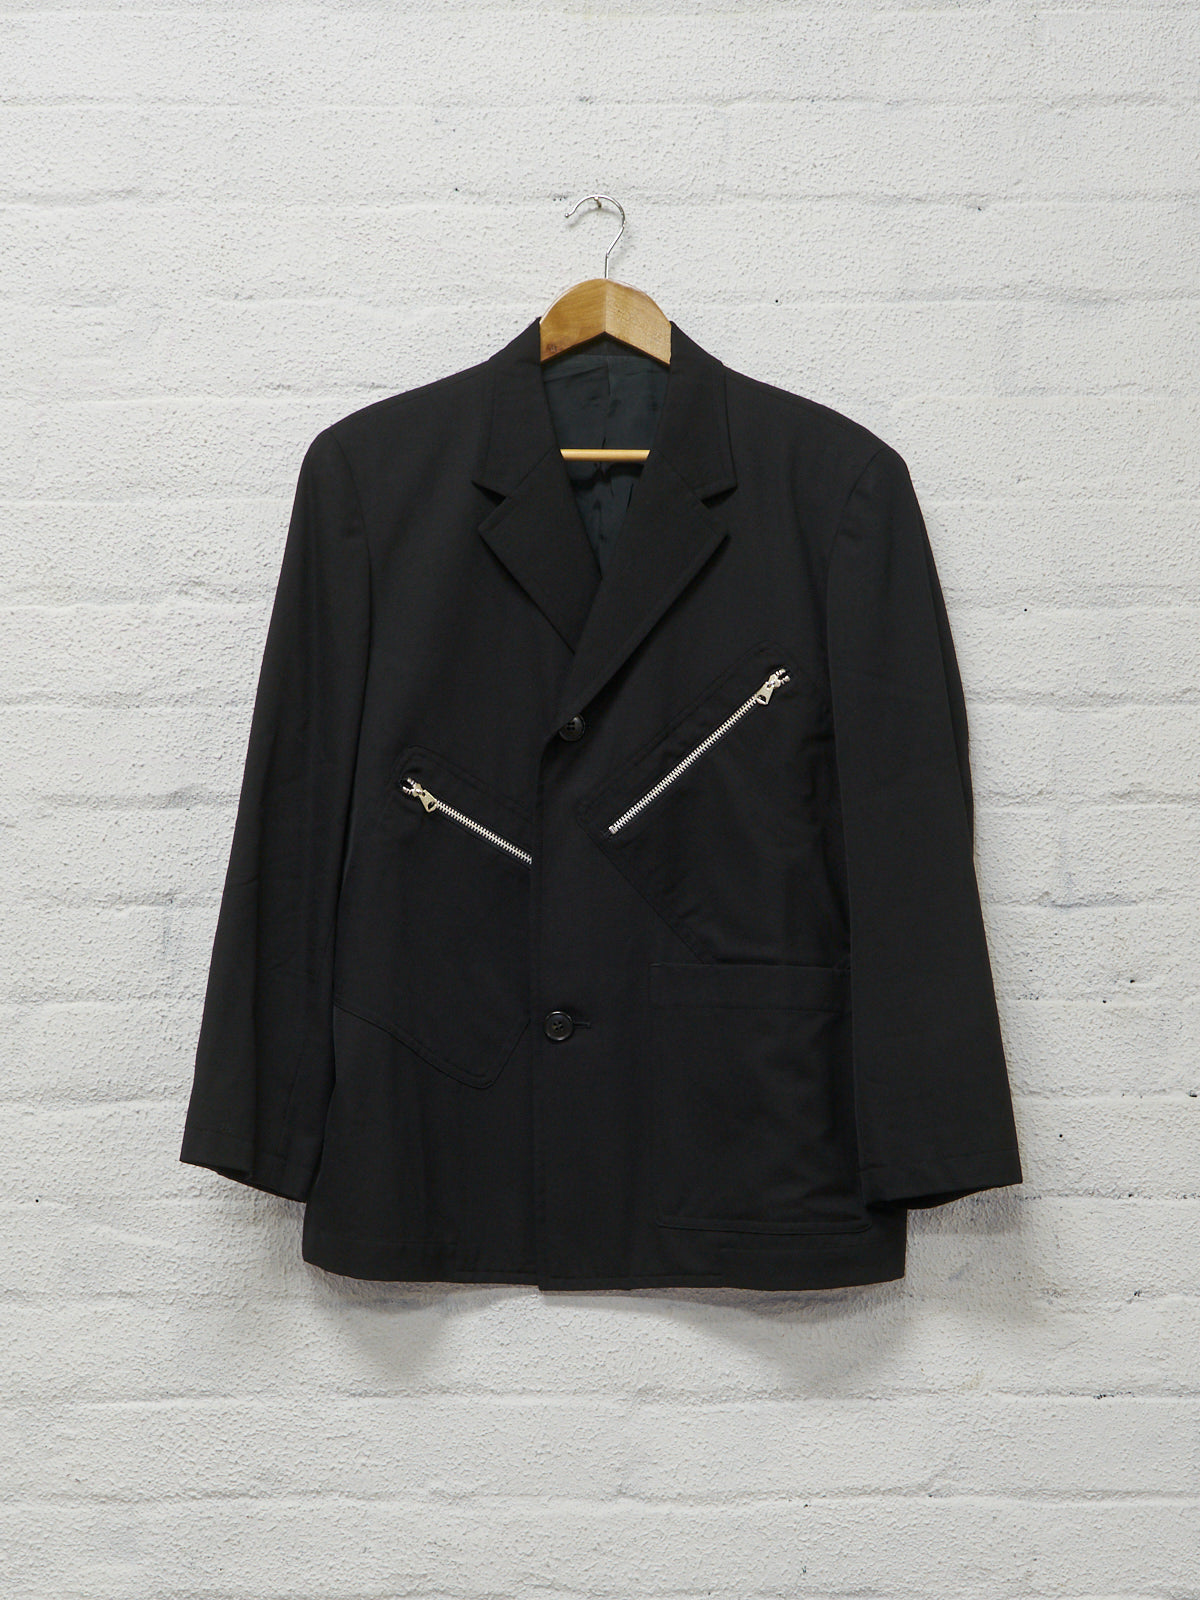 y's yohji yamamoto black wool zip pocket blazer - 1990s